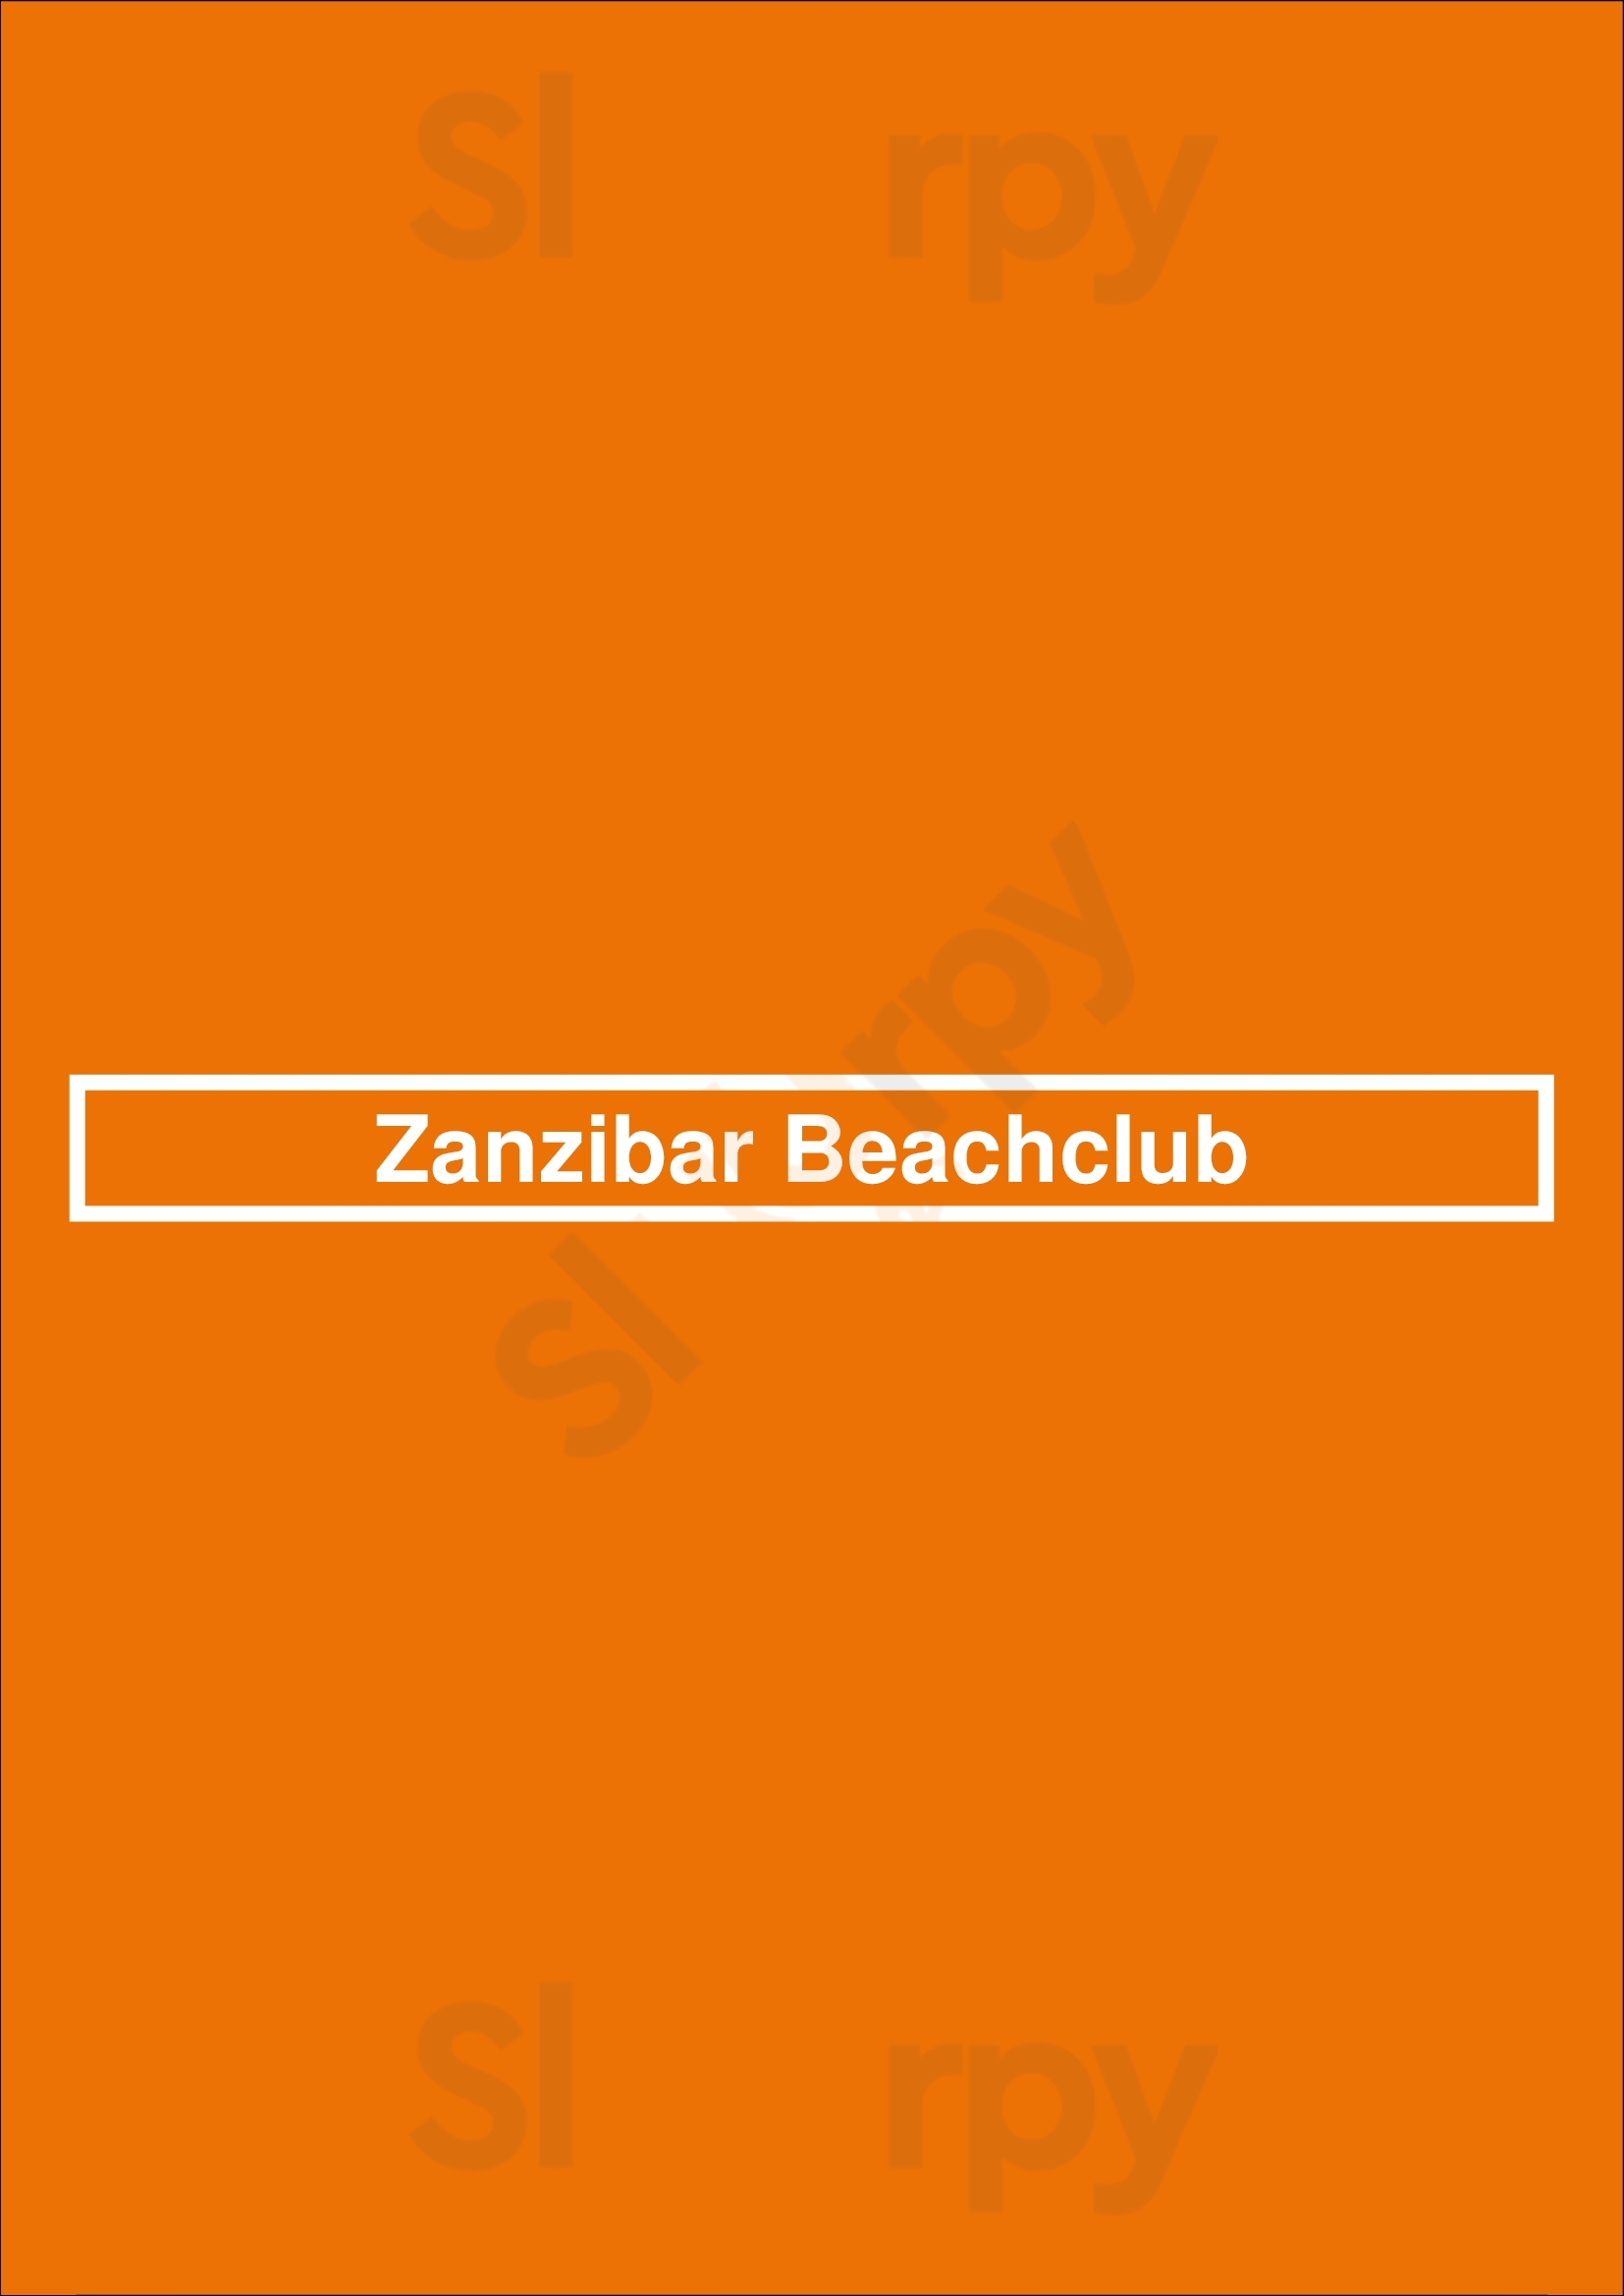 Zanzibar Beachclub Den Haag Menu - 1